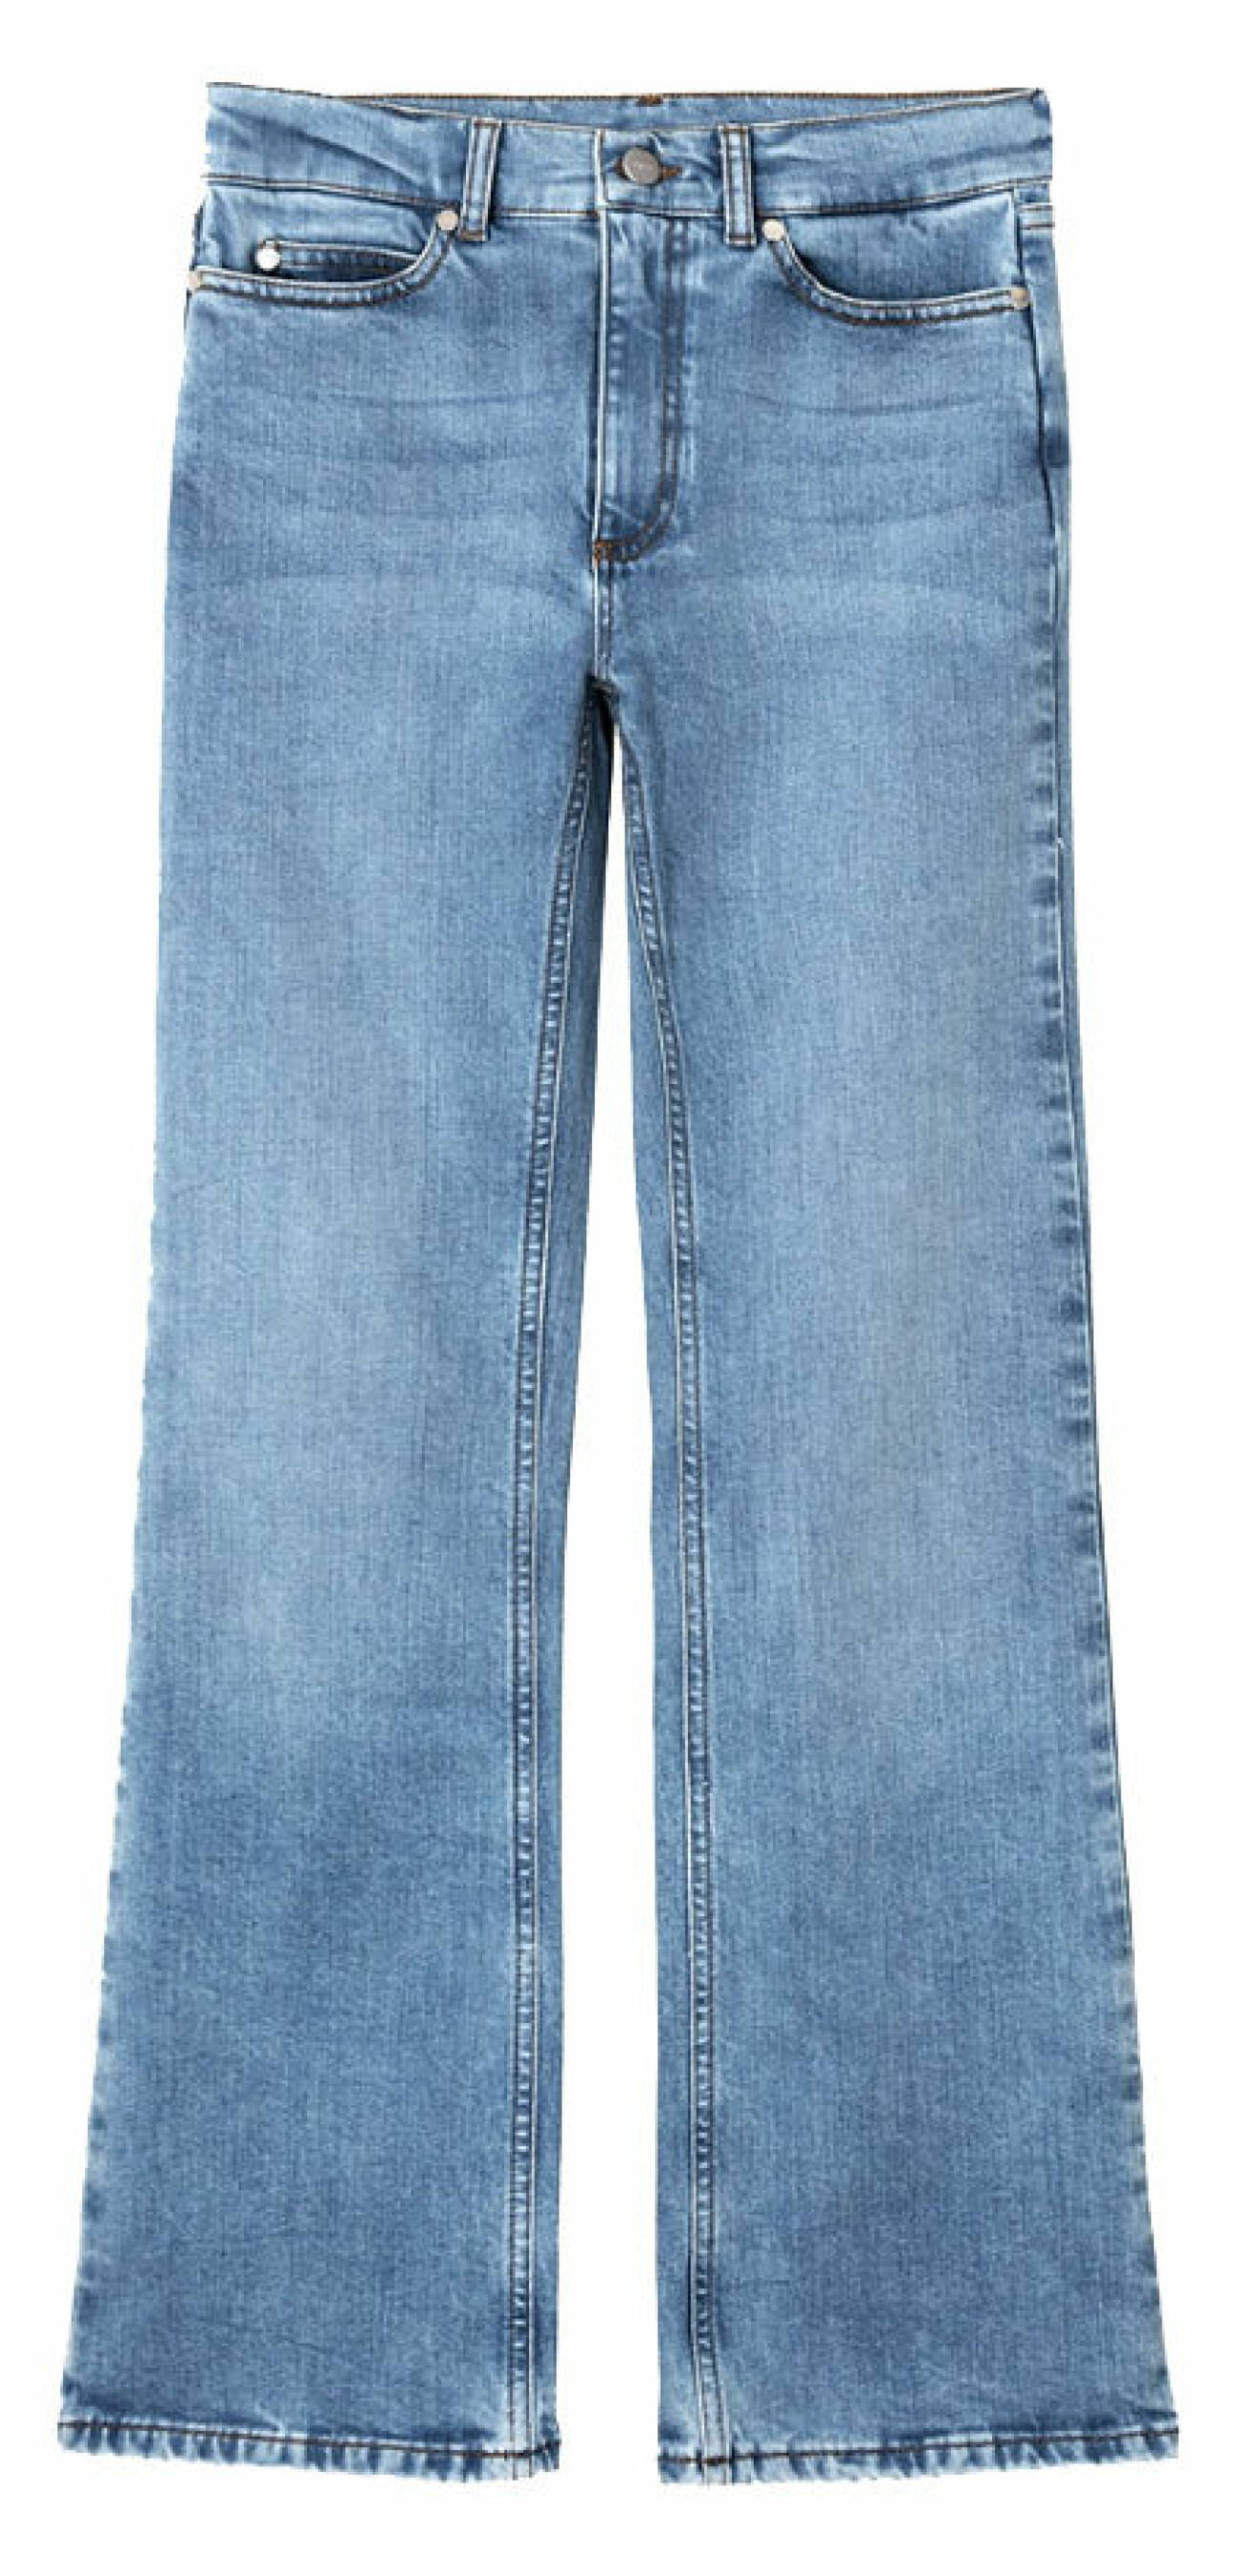 jeans från Mayla.